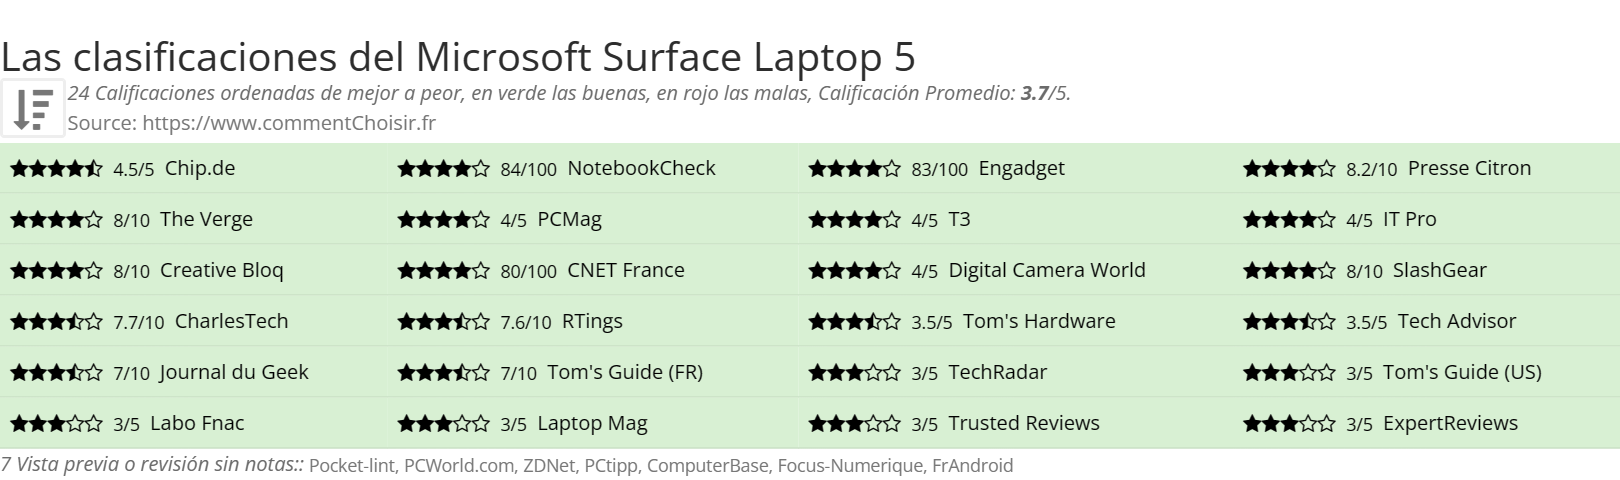 Ratings Microsoft Surface Laptop 5